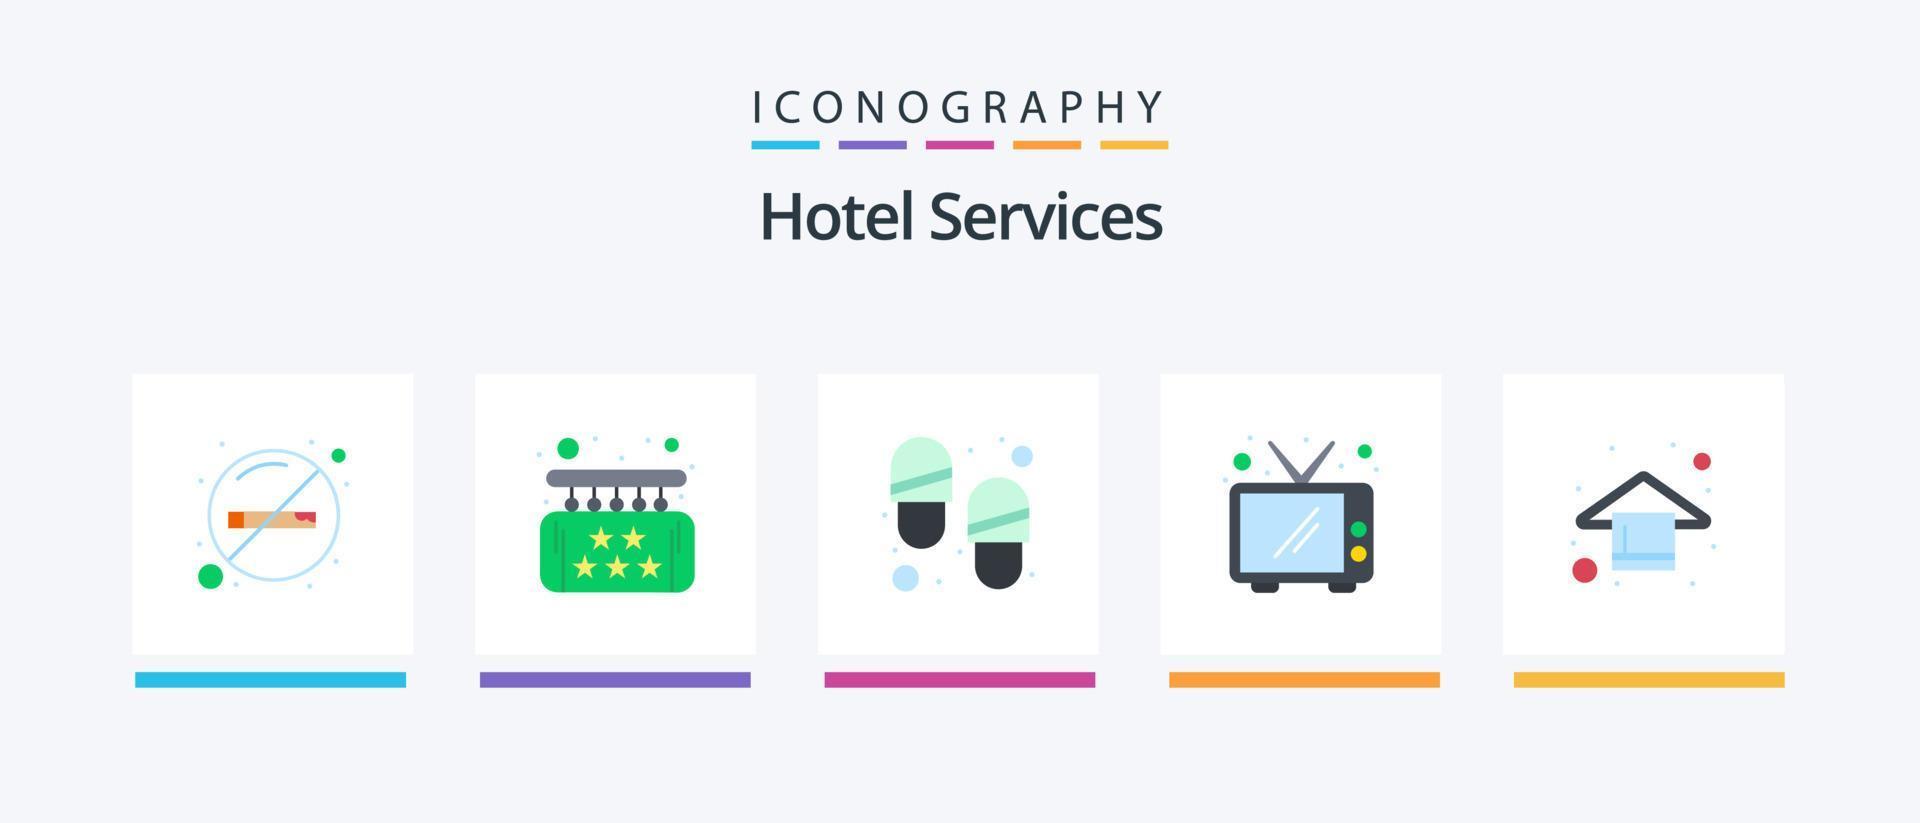 hotel servicios plano 5 5 icono paquete incluso baño. percha. servicio. televisor. comunicación. creativo íconos diseño vector